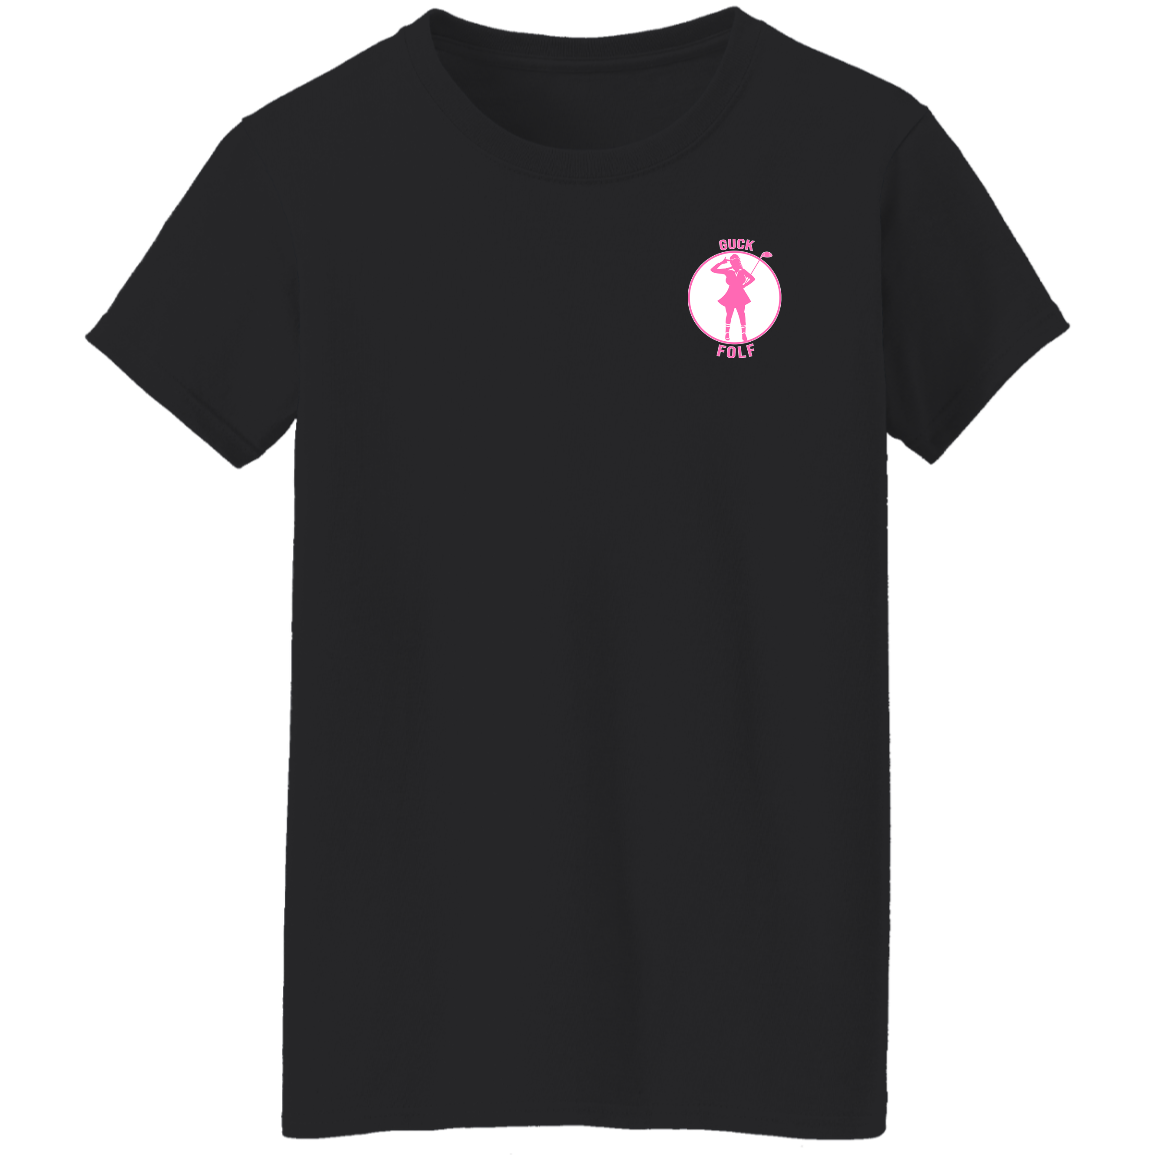 OPG Custom Design #19. GUCK FOLF. Female Edition. Ladies' 100% Cotton T-Shirt